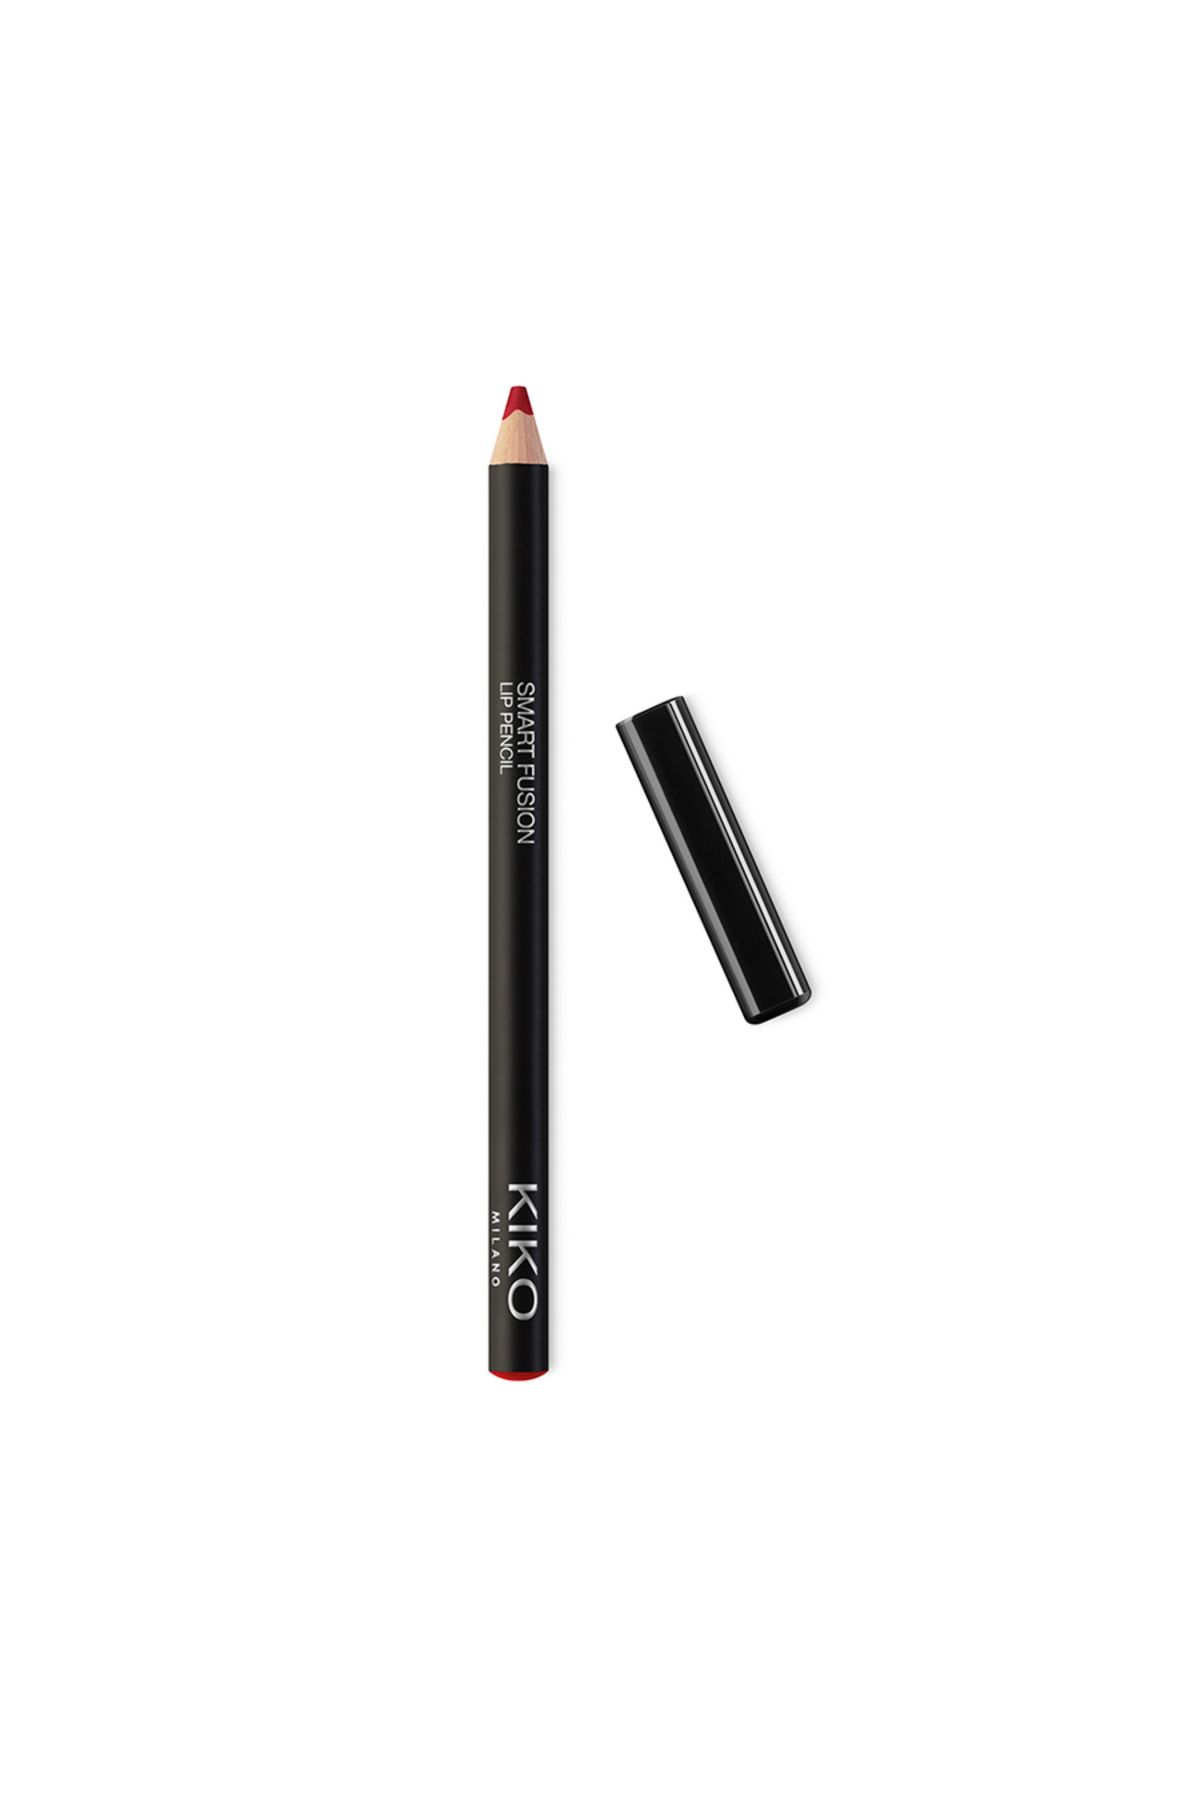 KIKO DUDAK KALEMİ - Smart Fusion Lip Pencil - 516 Cherry Red